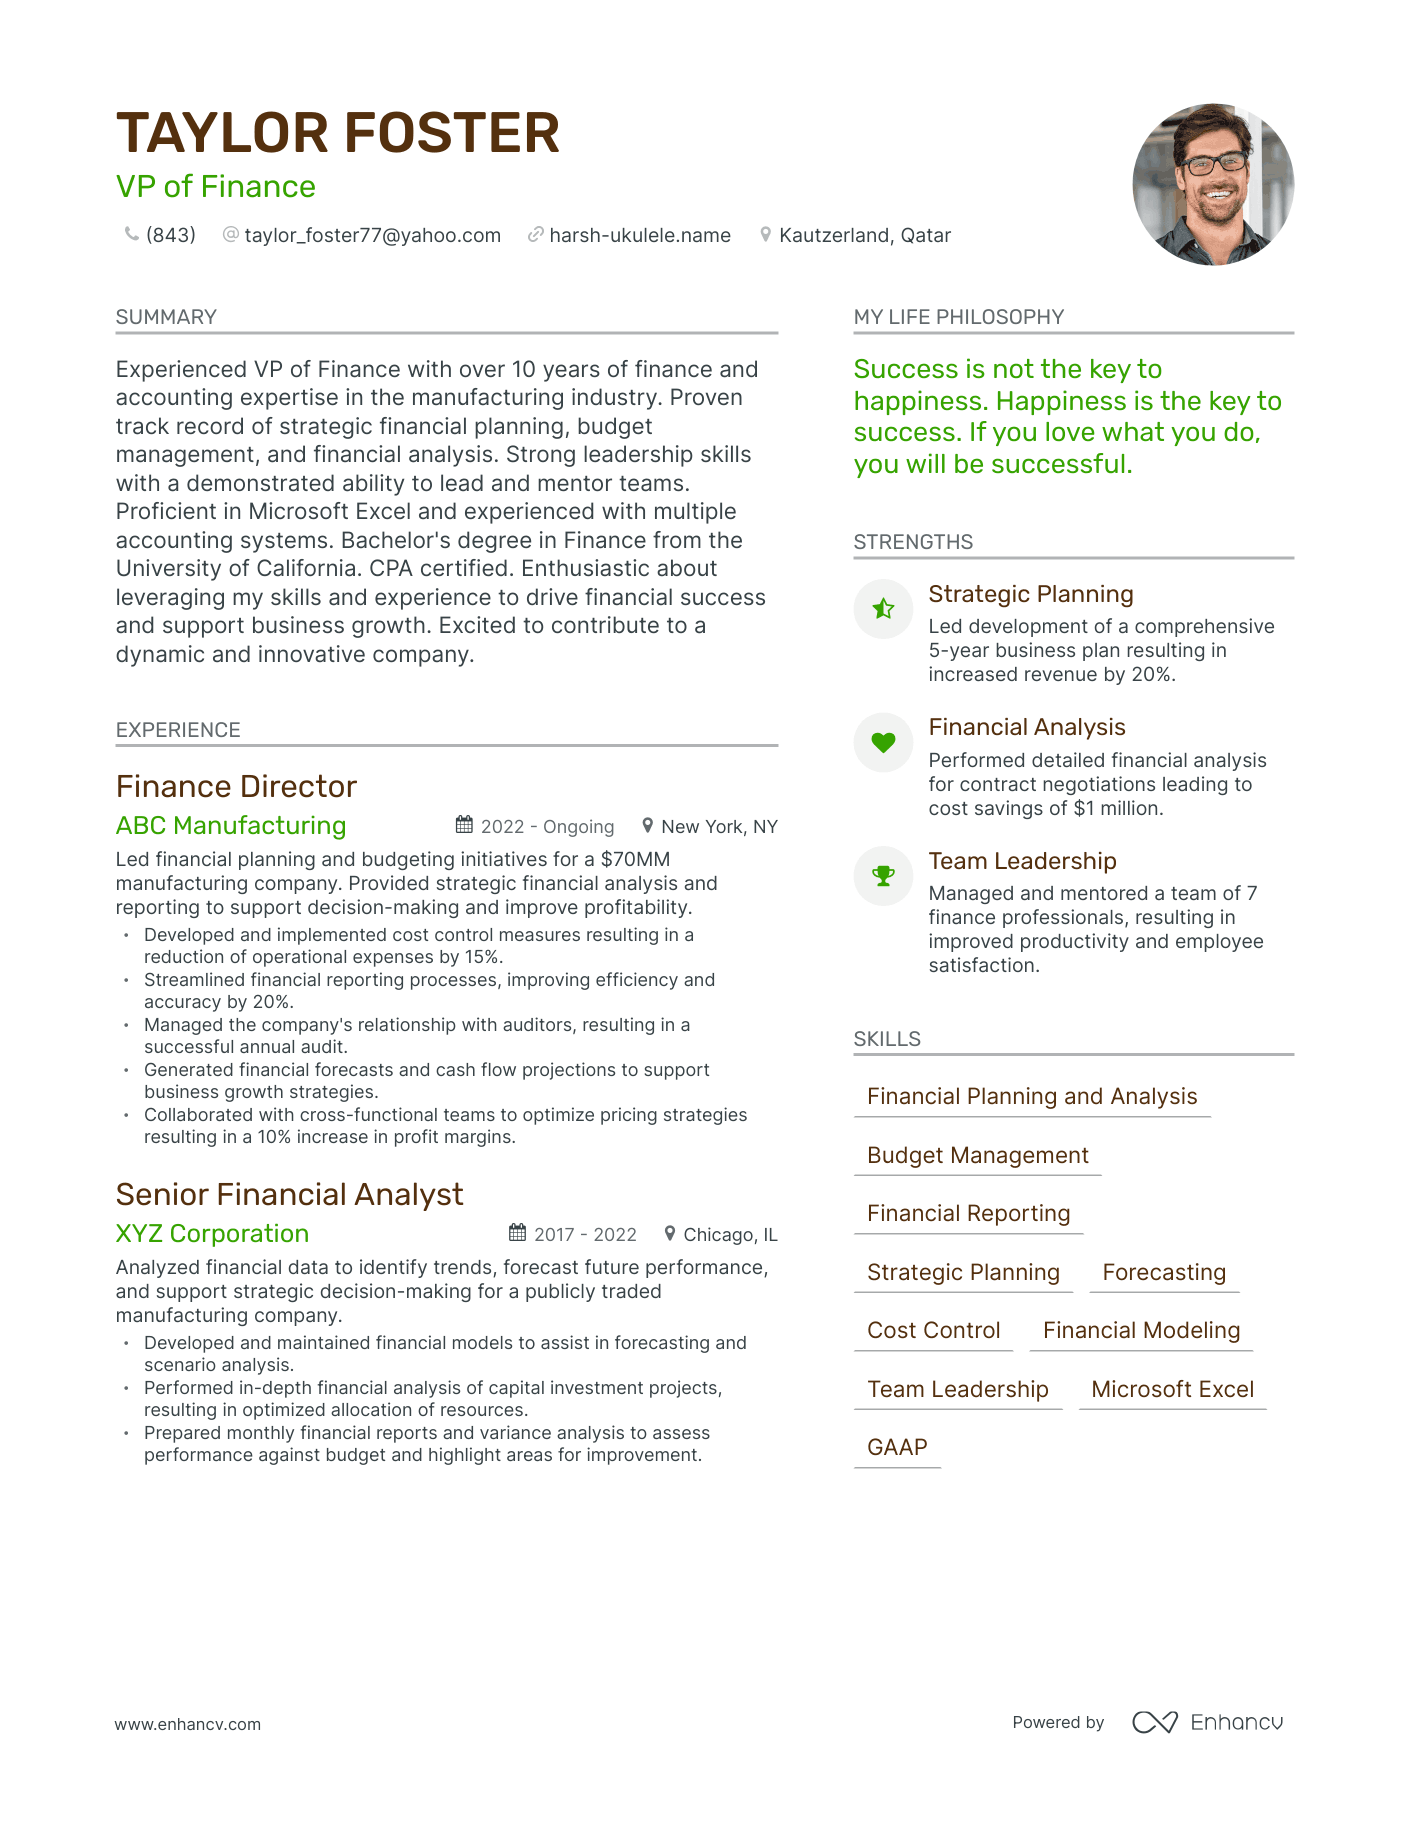 VP of Finance resume example